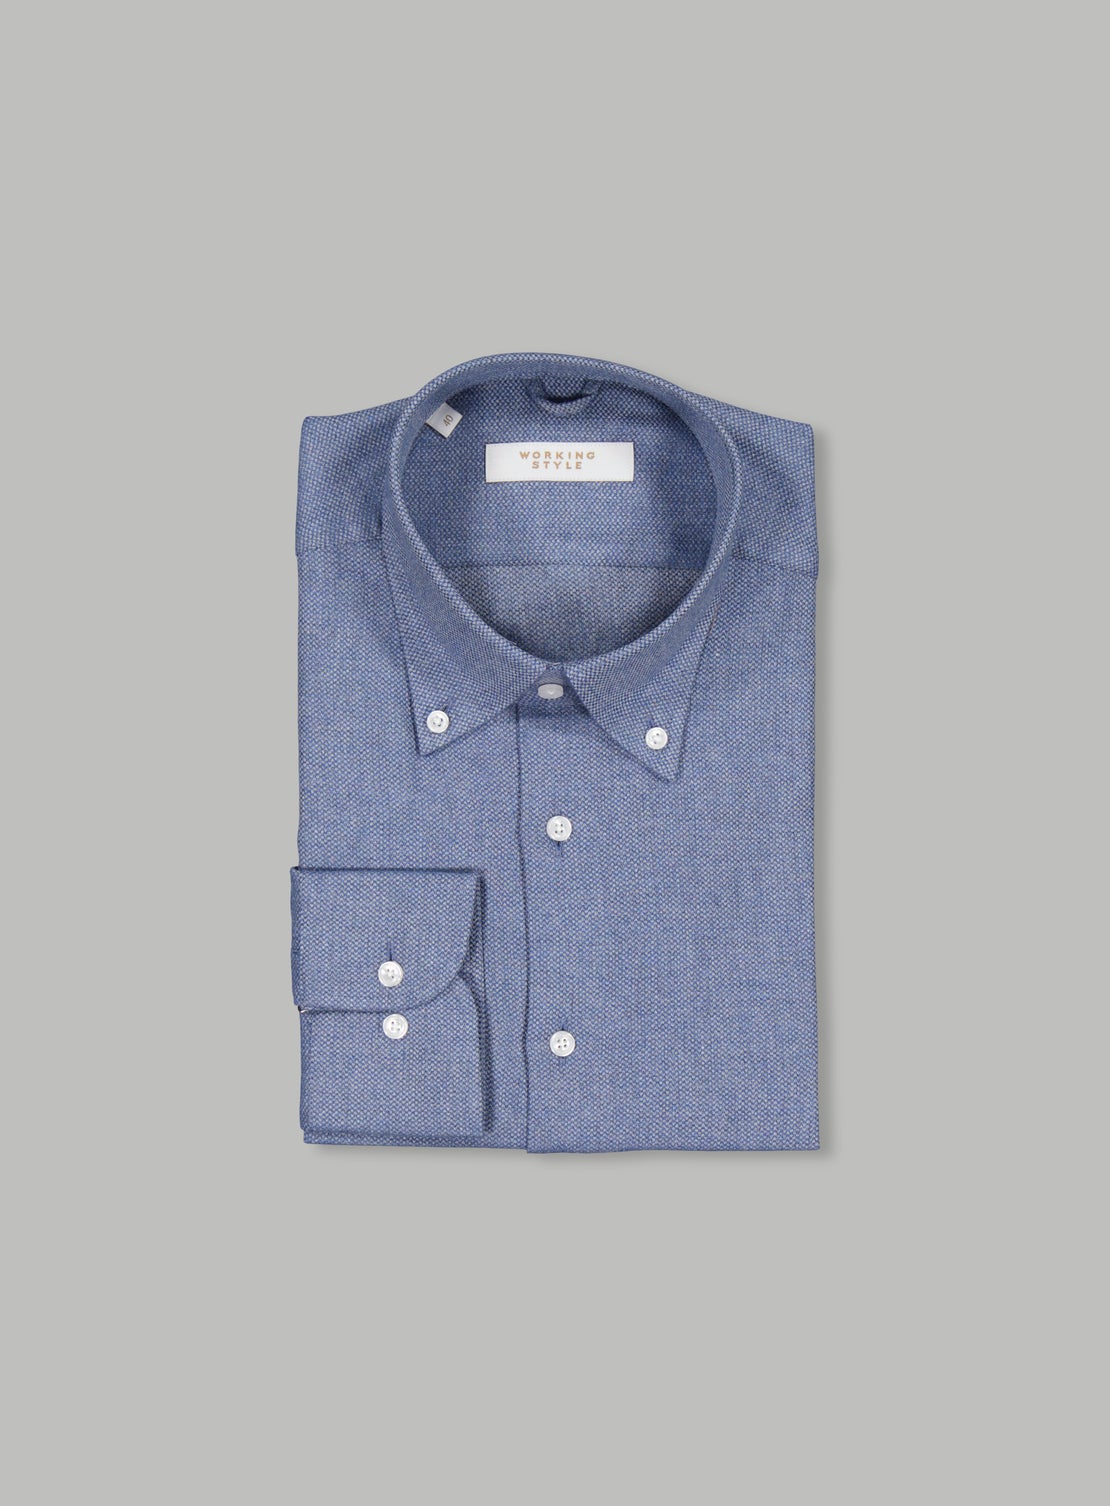 Lincoln Blue Hopsack Shirt